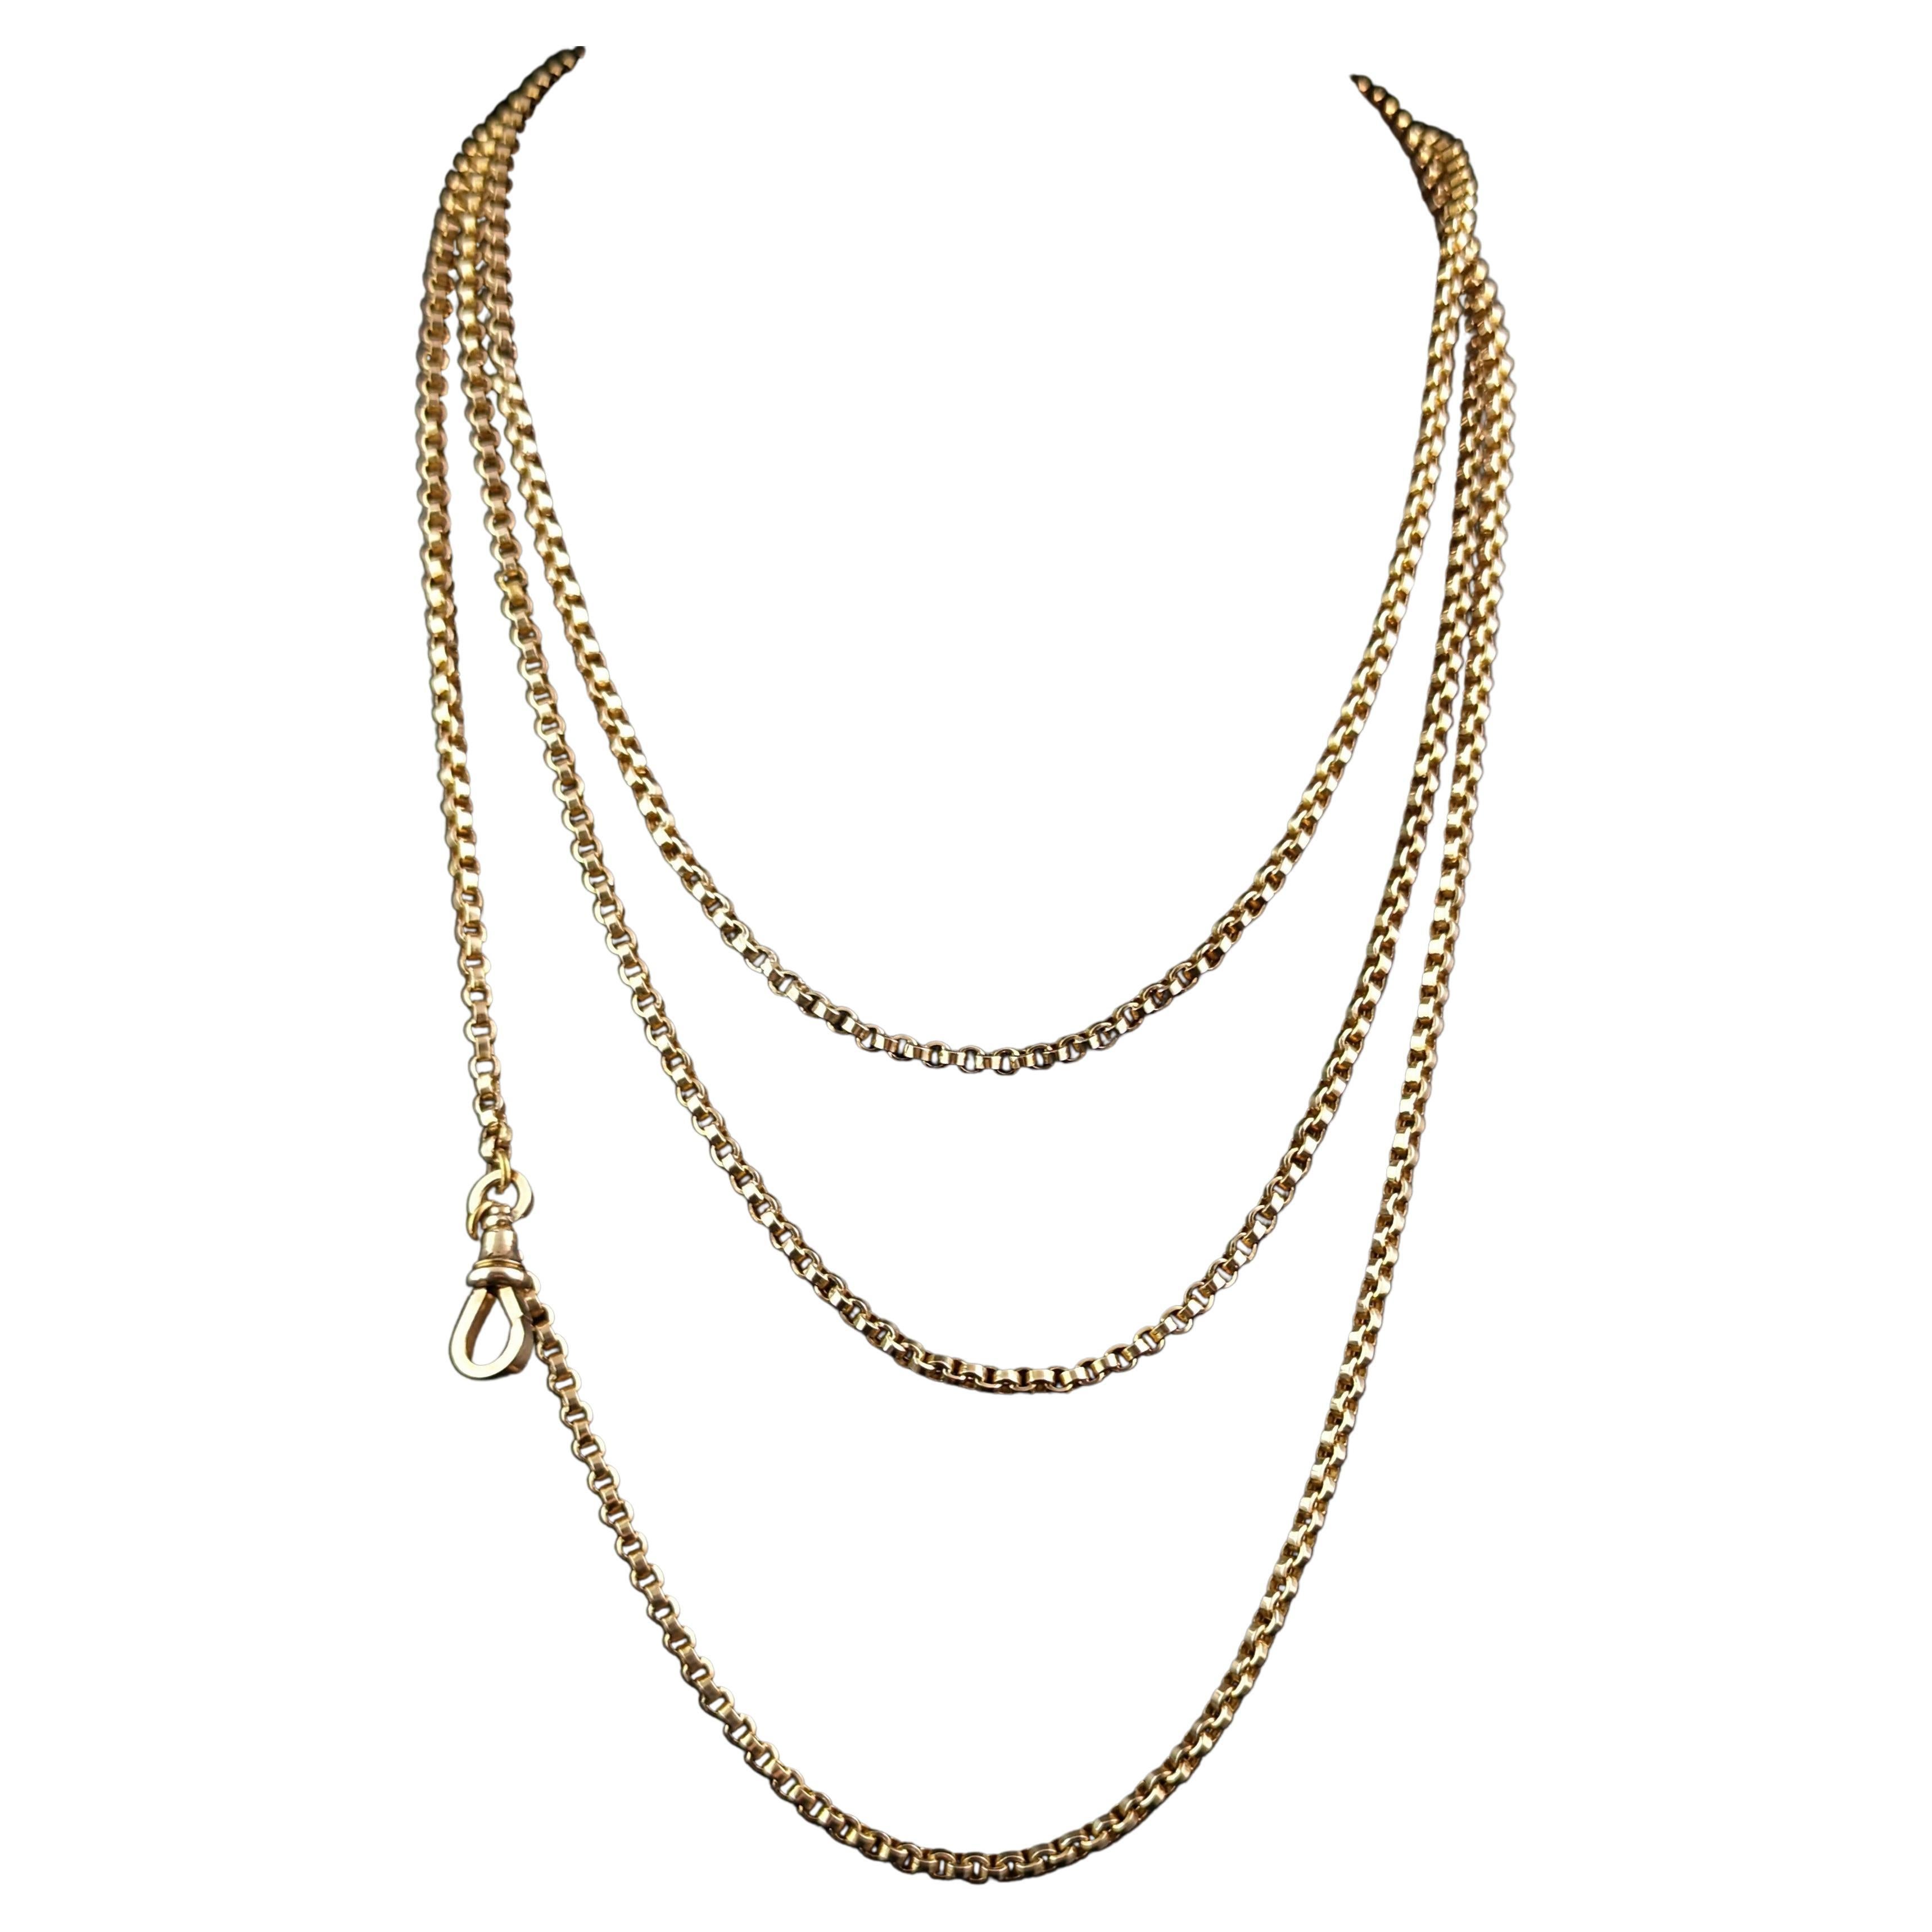 Antique 9k gold longuard chain necklace, Victorian 